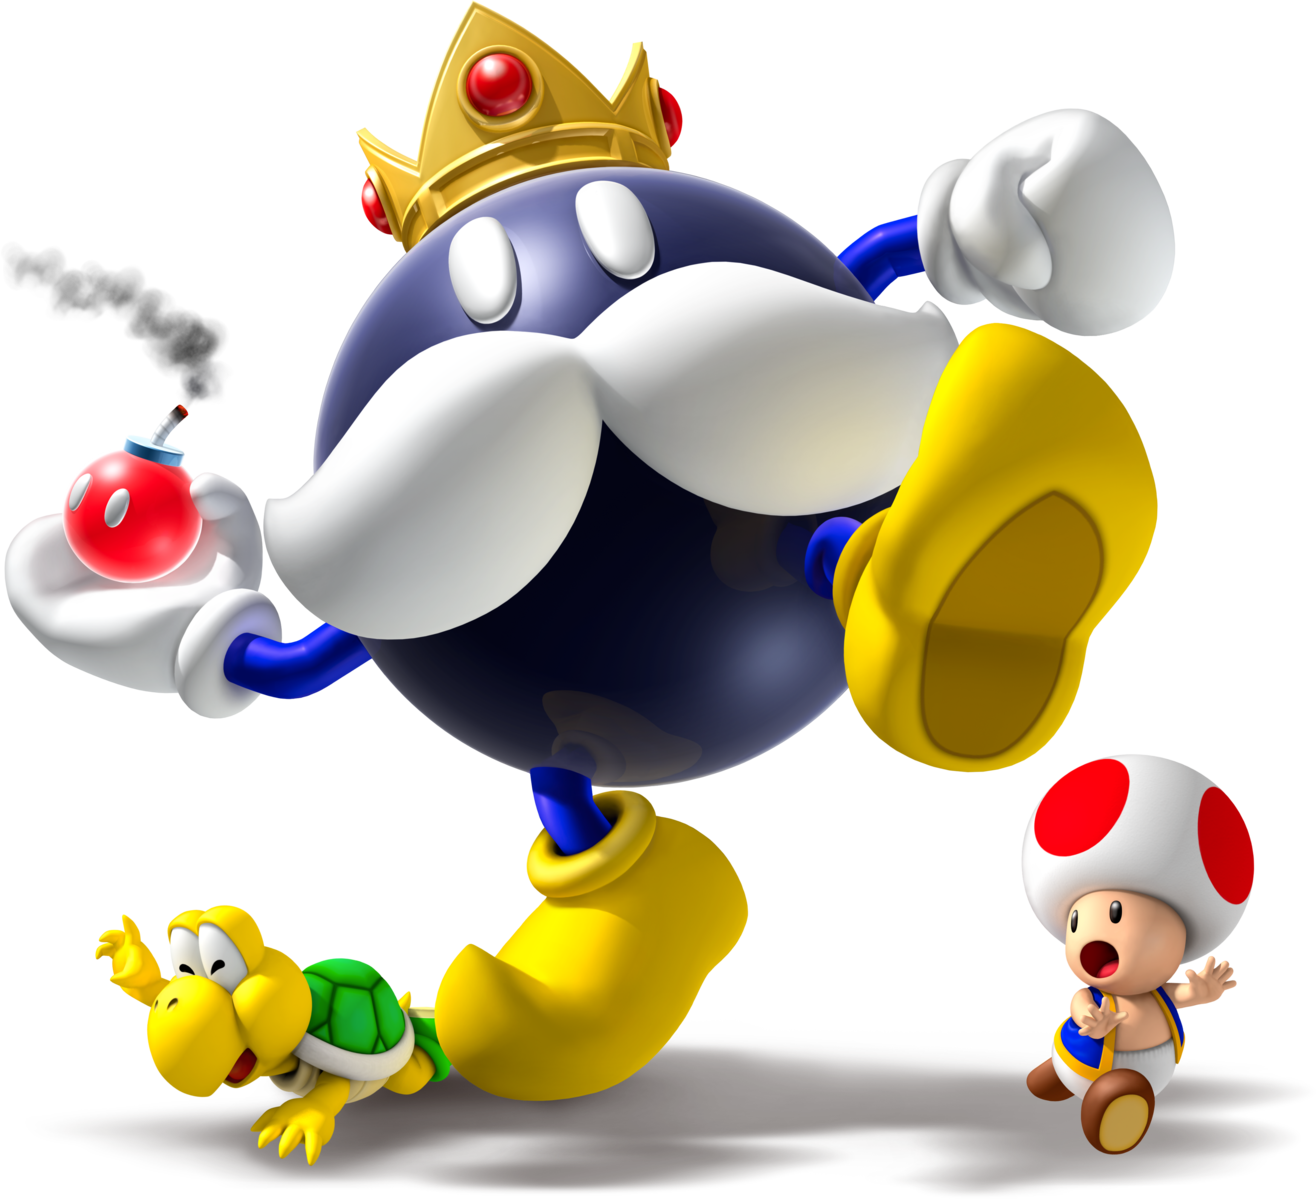 File Mp9 King Bob Omb Artwork Png Super Mario Wiki The Mario Encyclopedia